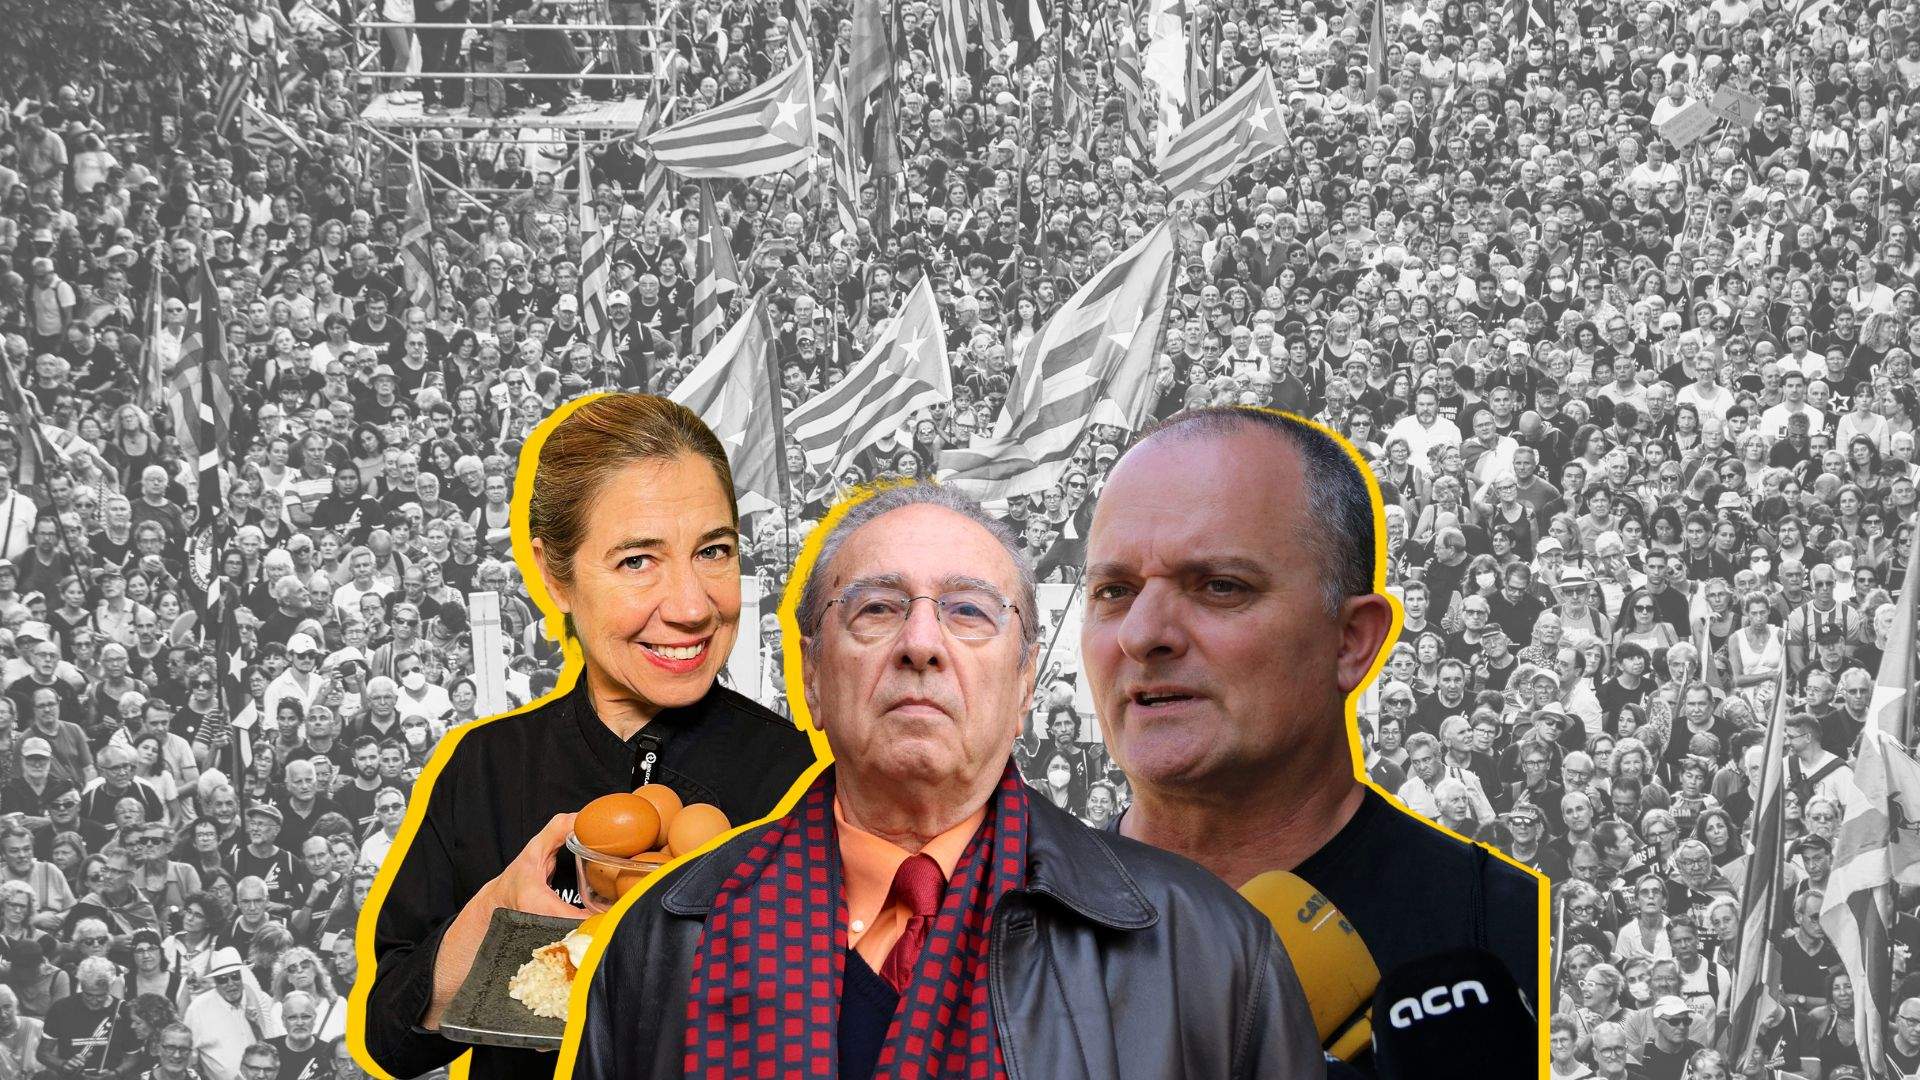 Julià de Jódar, Toni Albà o Ada Parellada, entre los firmantes de un manifiesto en apoyo a Puigdemont